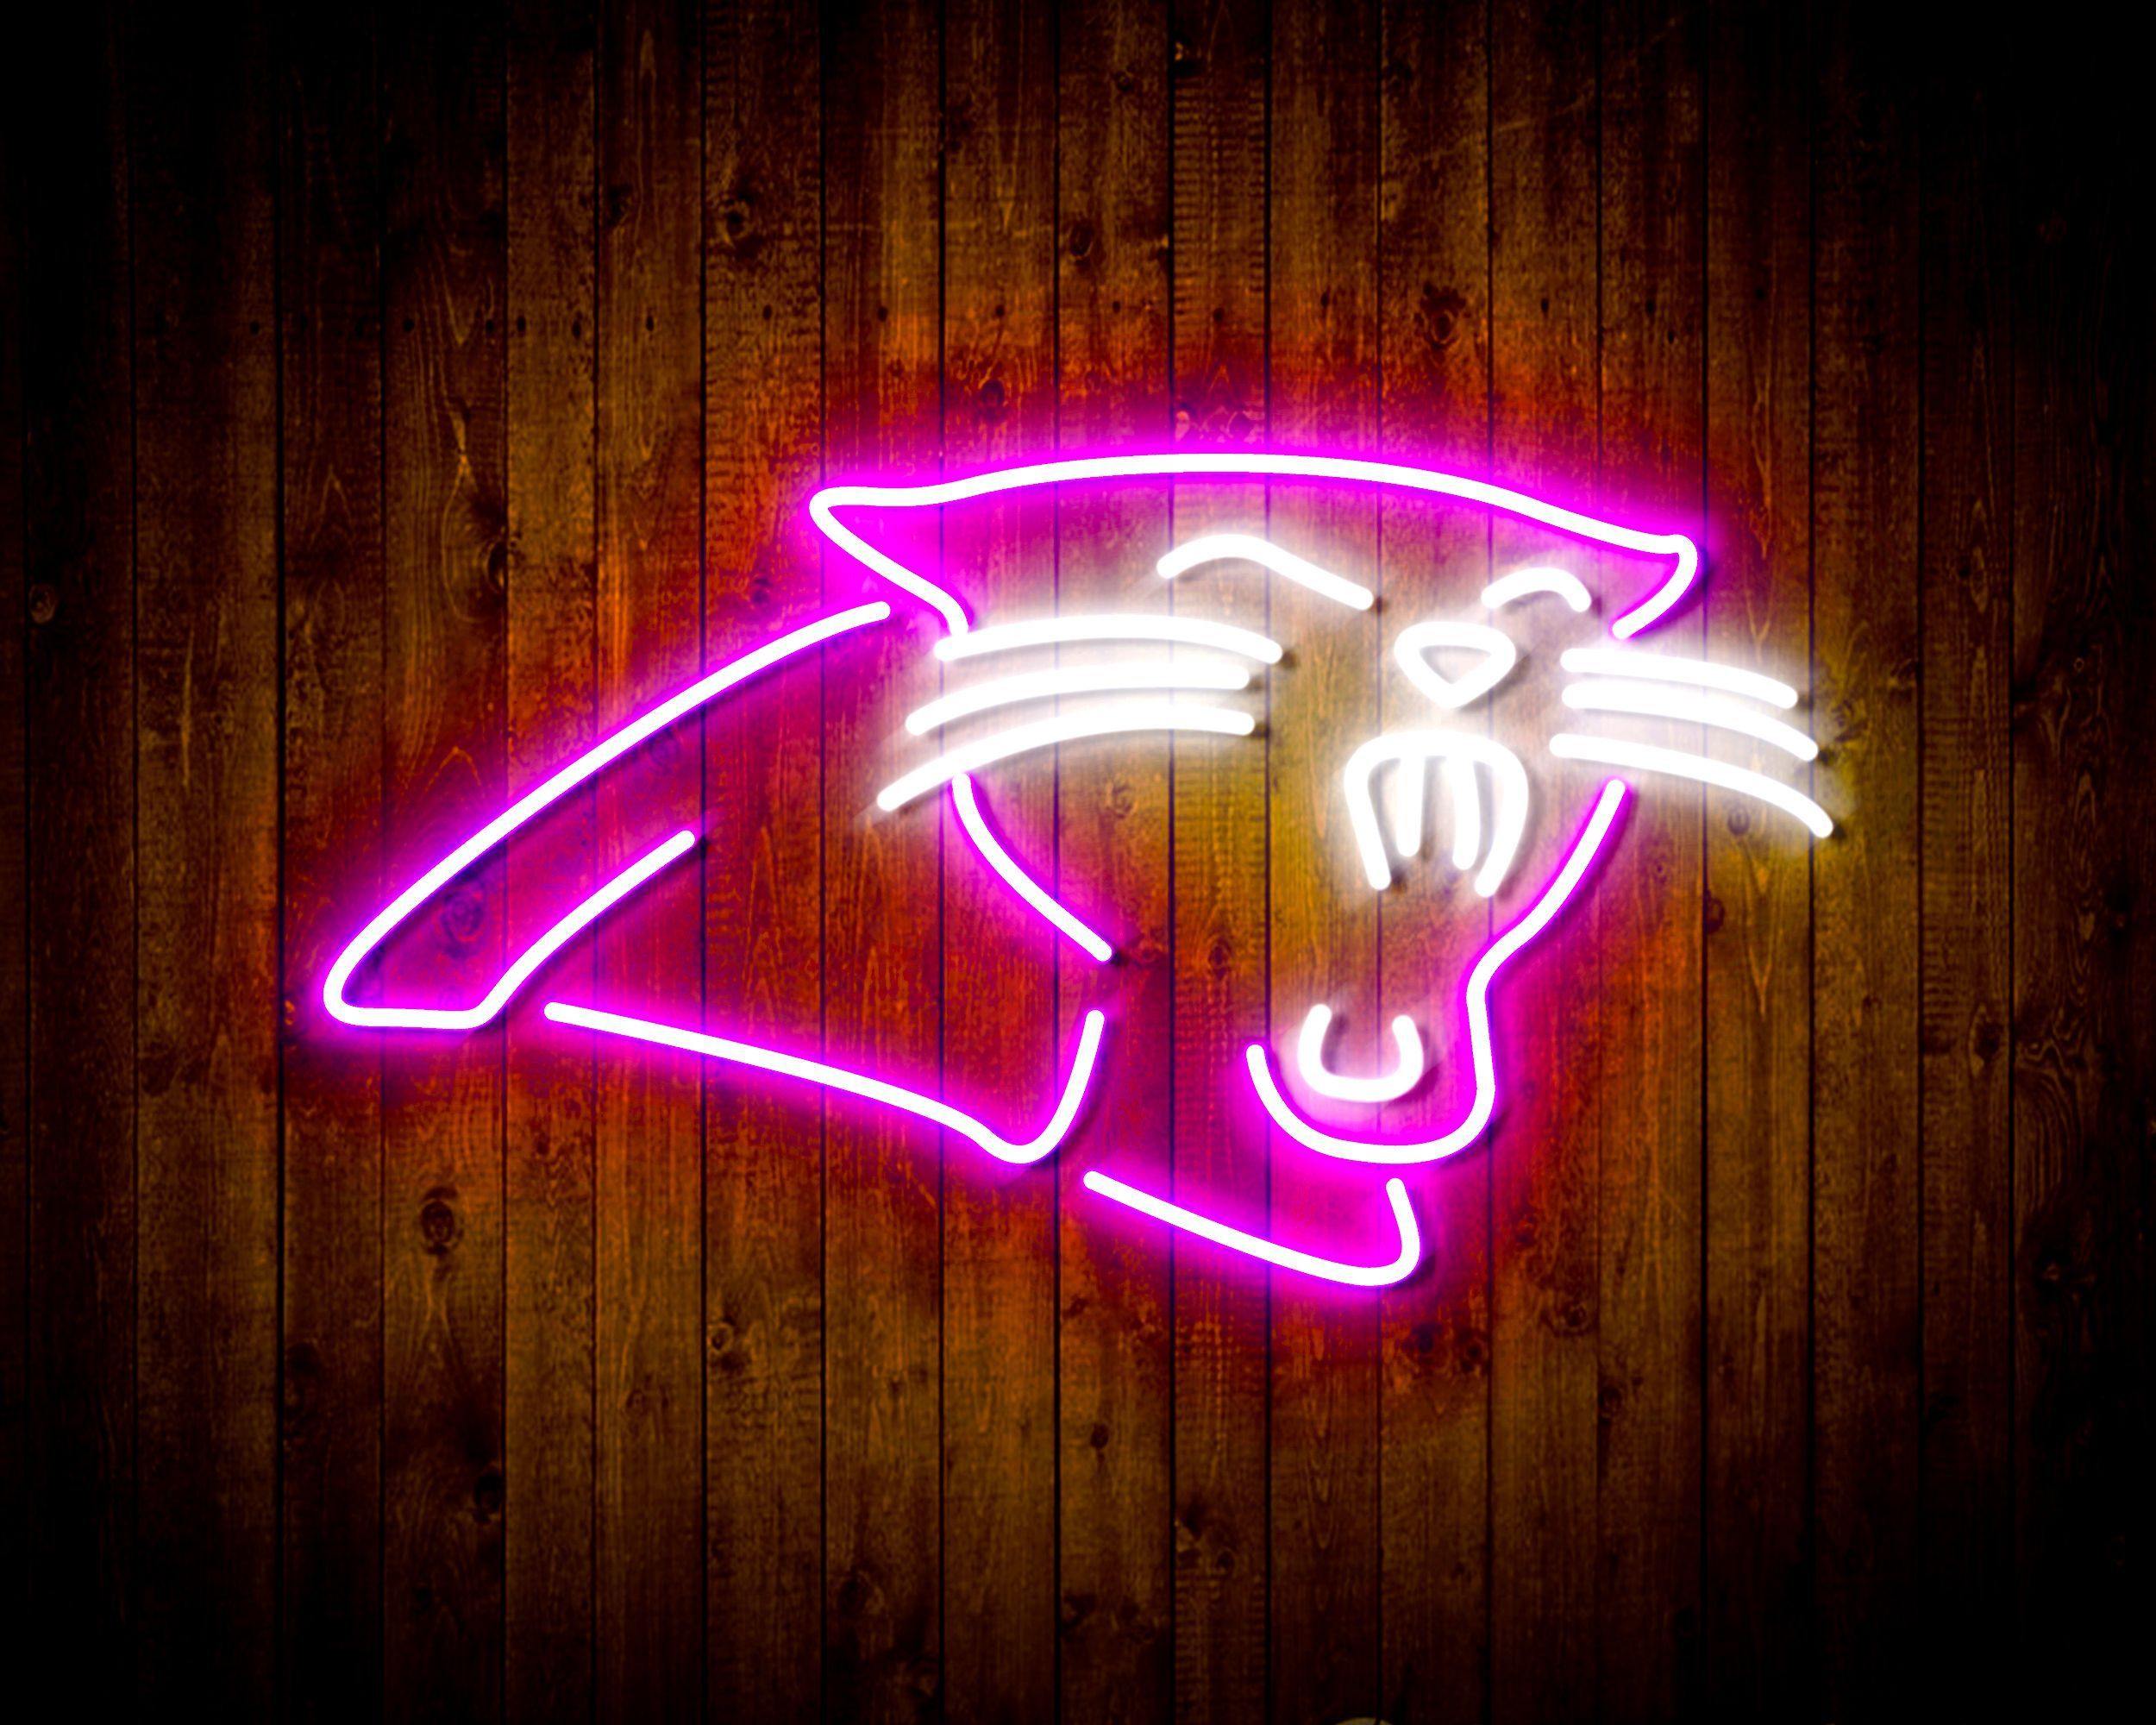 Florida Panthers Neon Player 12x16 – Fan Creations GA